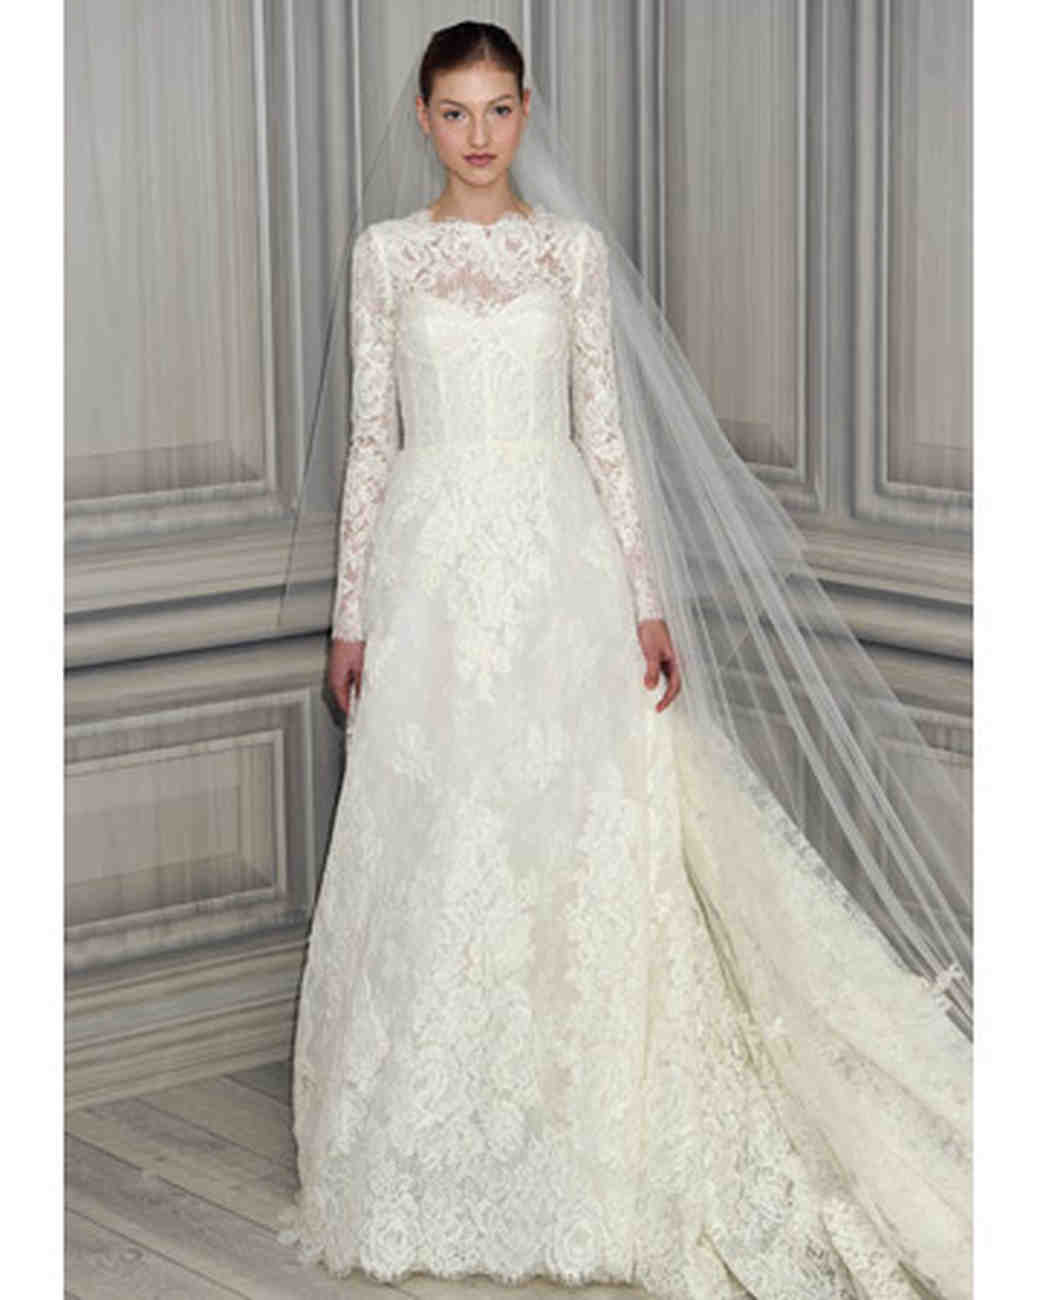 Get Kate Middleton's Royal Wedding-Dress Look | Martha Stewart Weddings